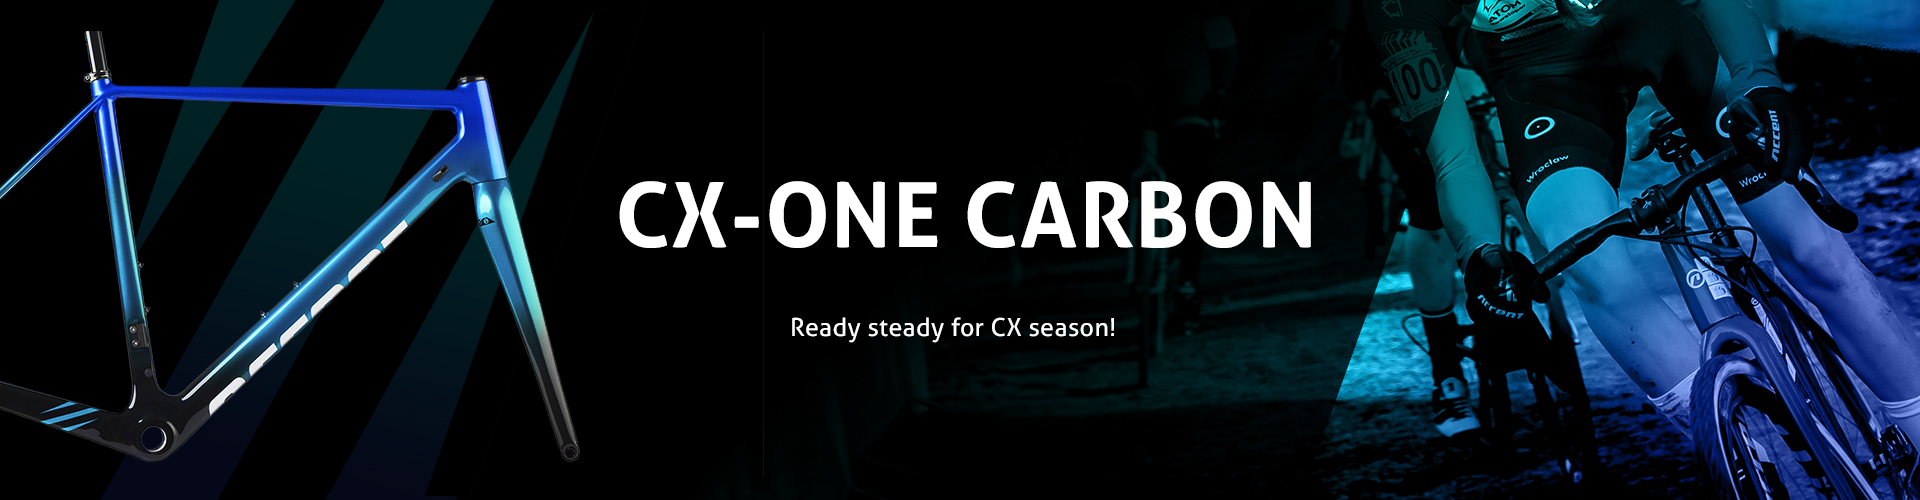 CX-One Carbon ready for CX season!